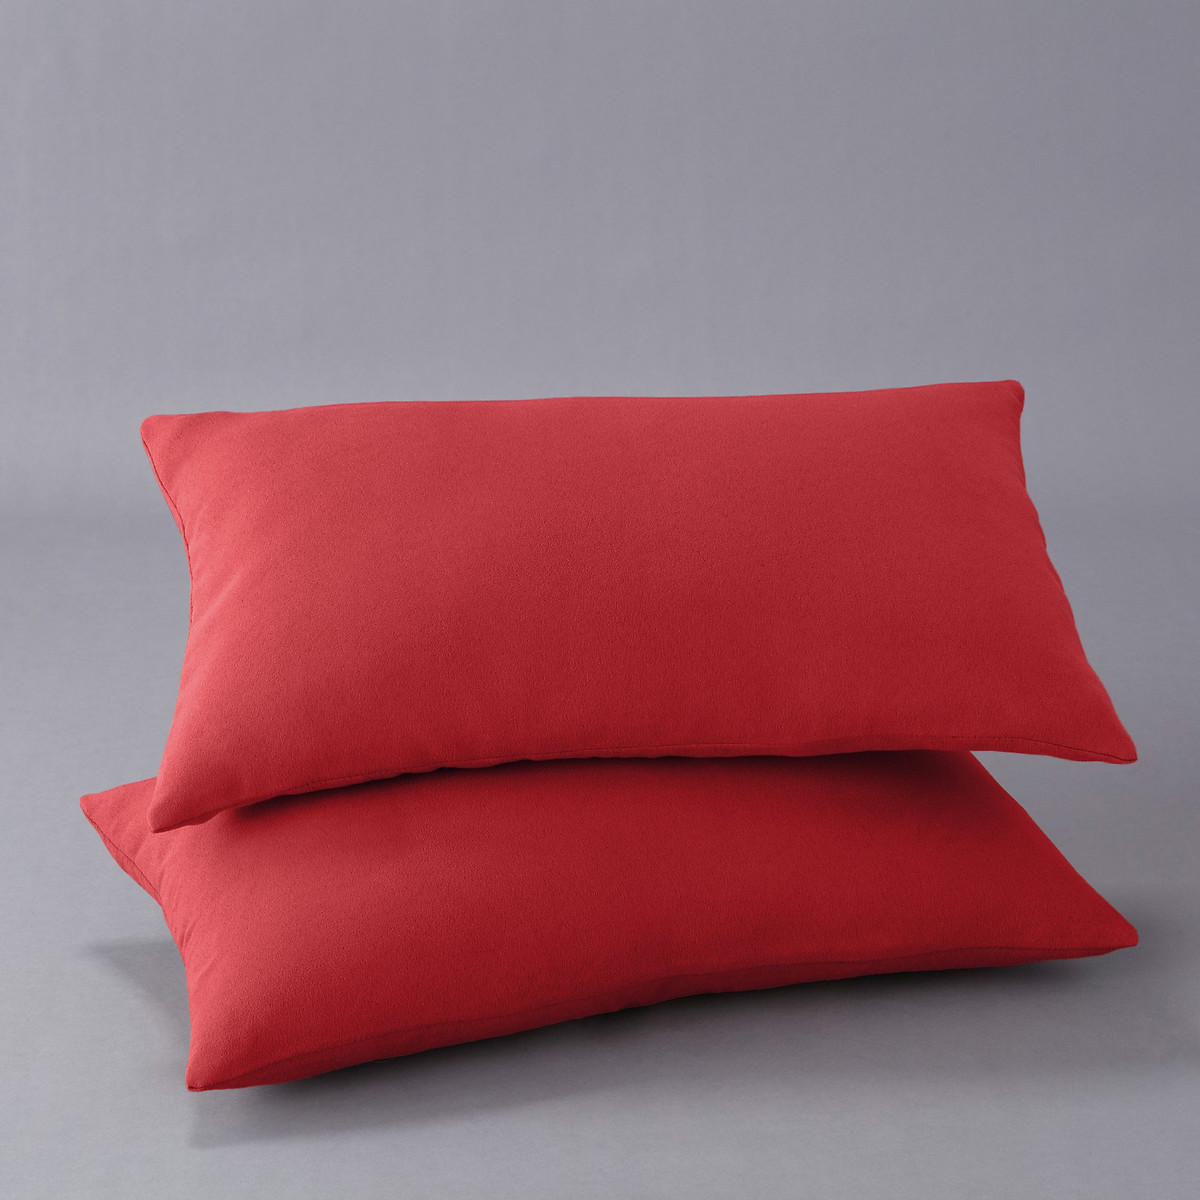 Чехла La Redoute На подушку 60 x 40 см красный, размер 60 x 40 см - фото 1